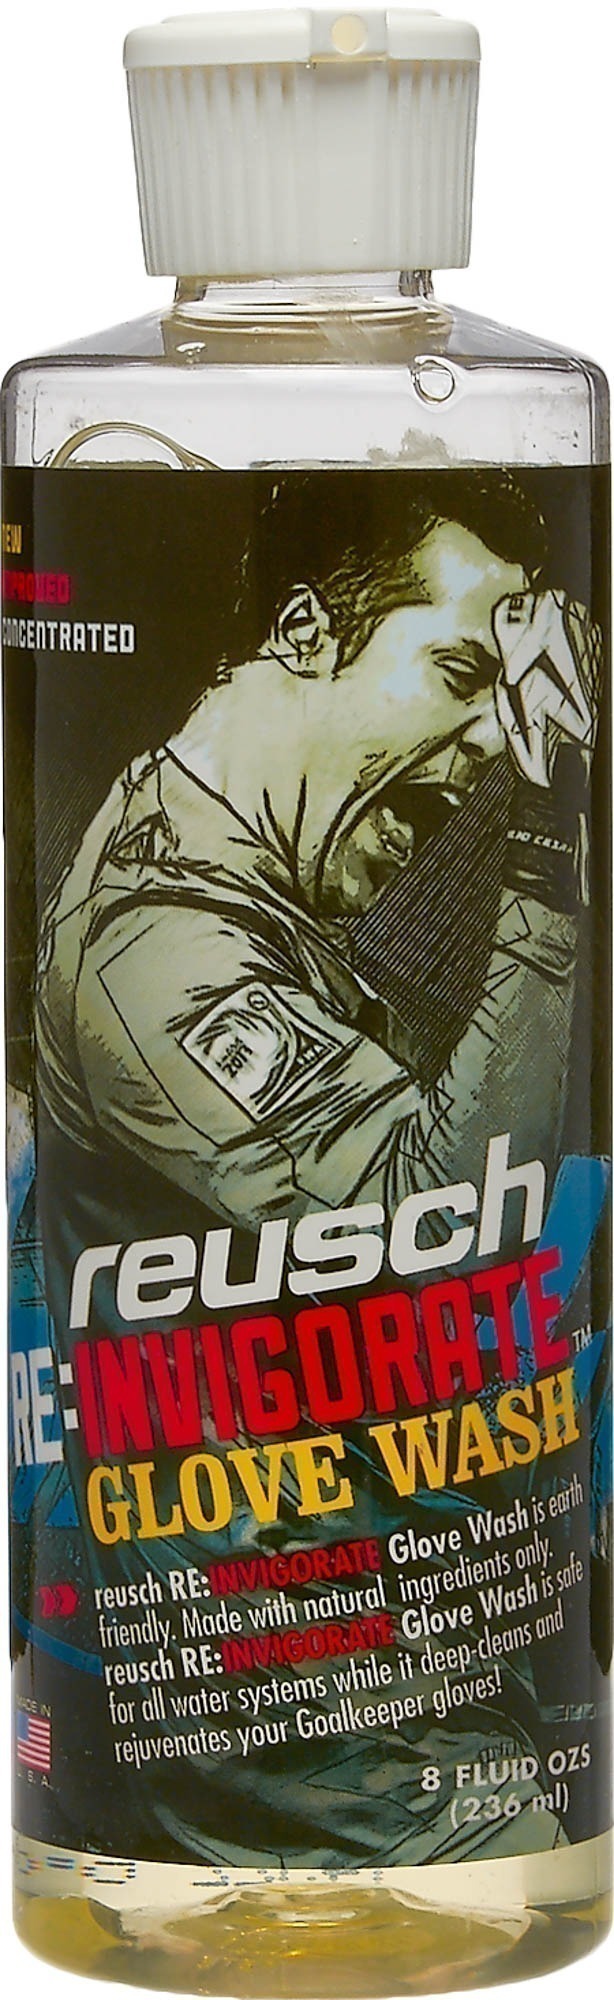 Reusch Re Invigorate Glove Wash